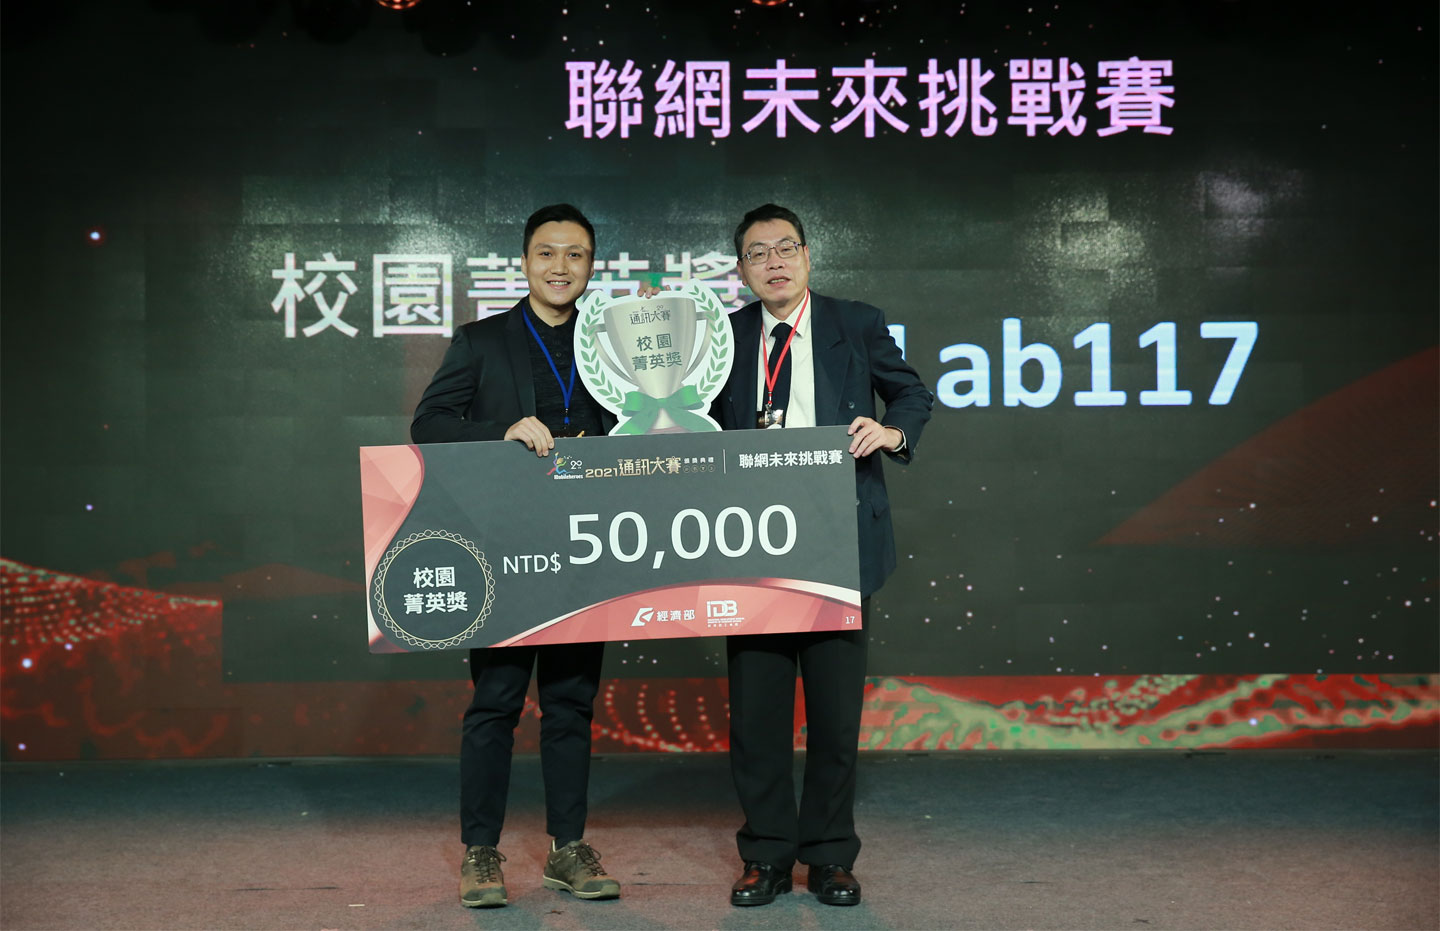 Lab117 團隊獲得 2021 通訊大賽「聯網未來挑戰賽校園菁英獎」。